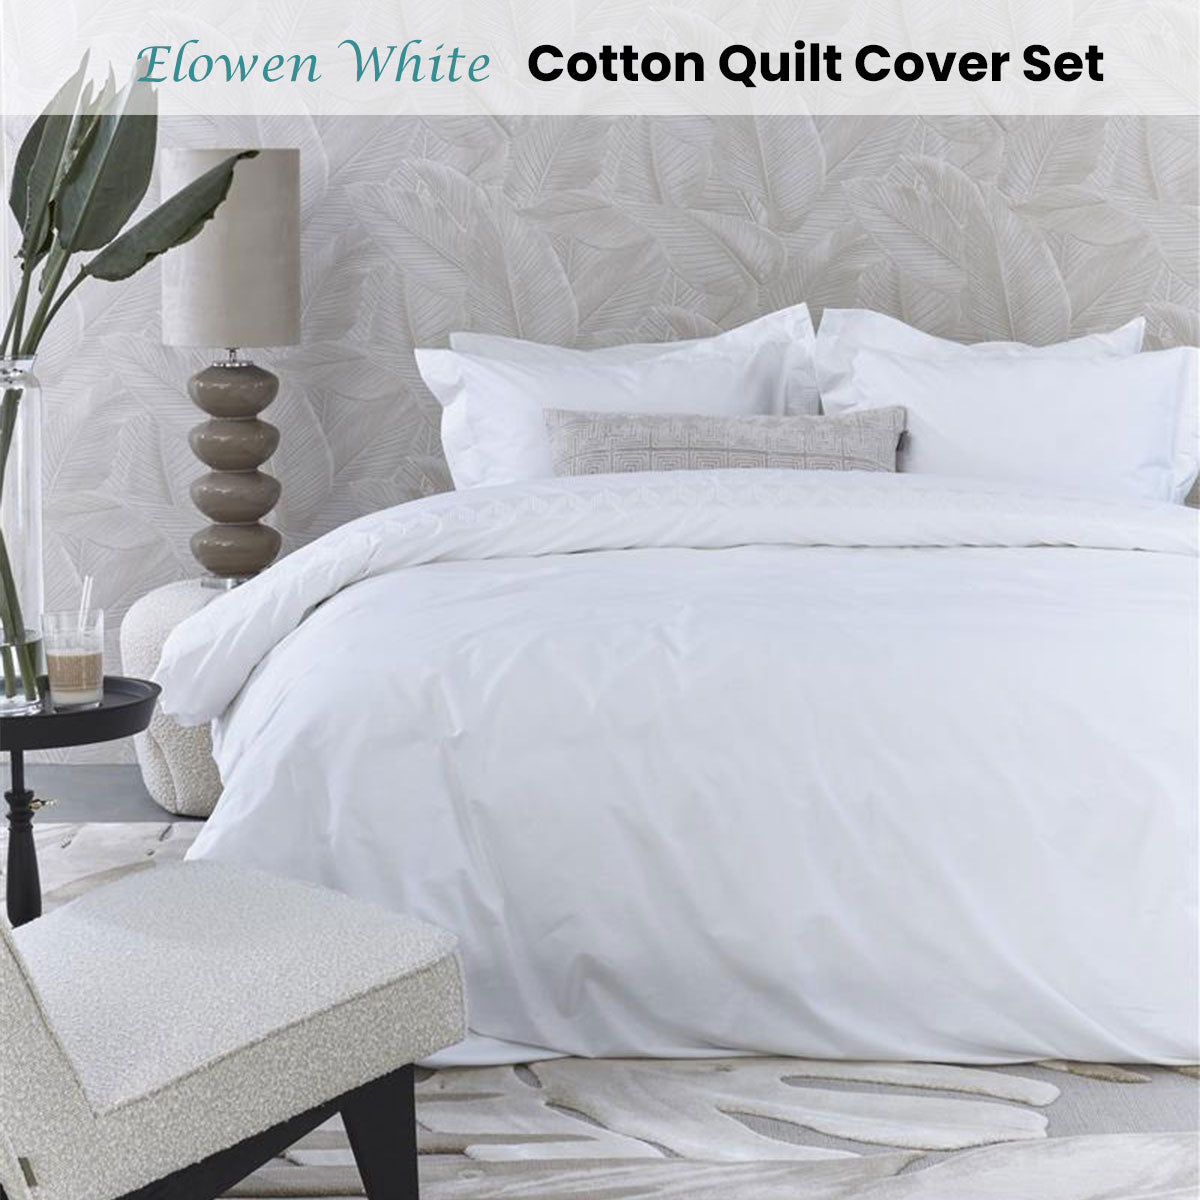 Riviera Maison Elowen White Cotton Quilt Cover Set Queen